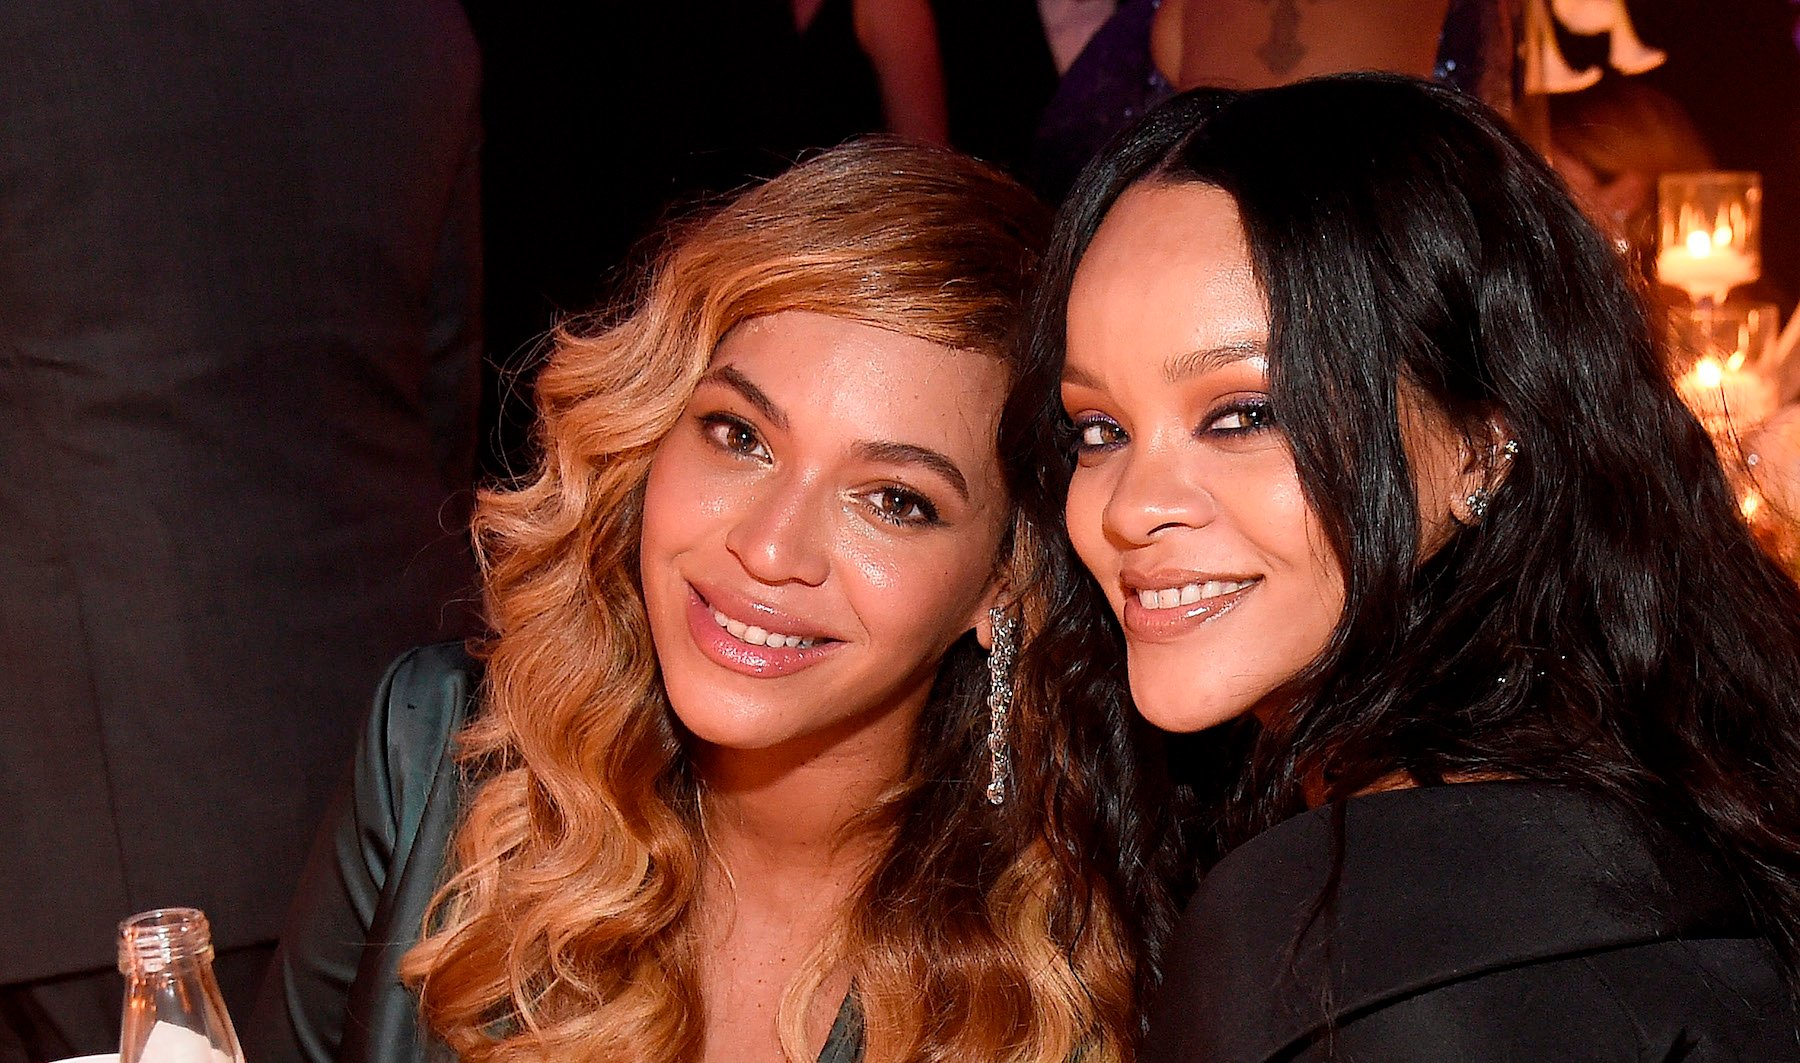 Super Bowl halftime show performers Beyoncé and Rihanna